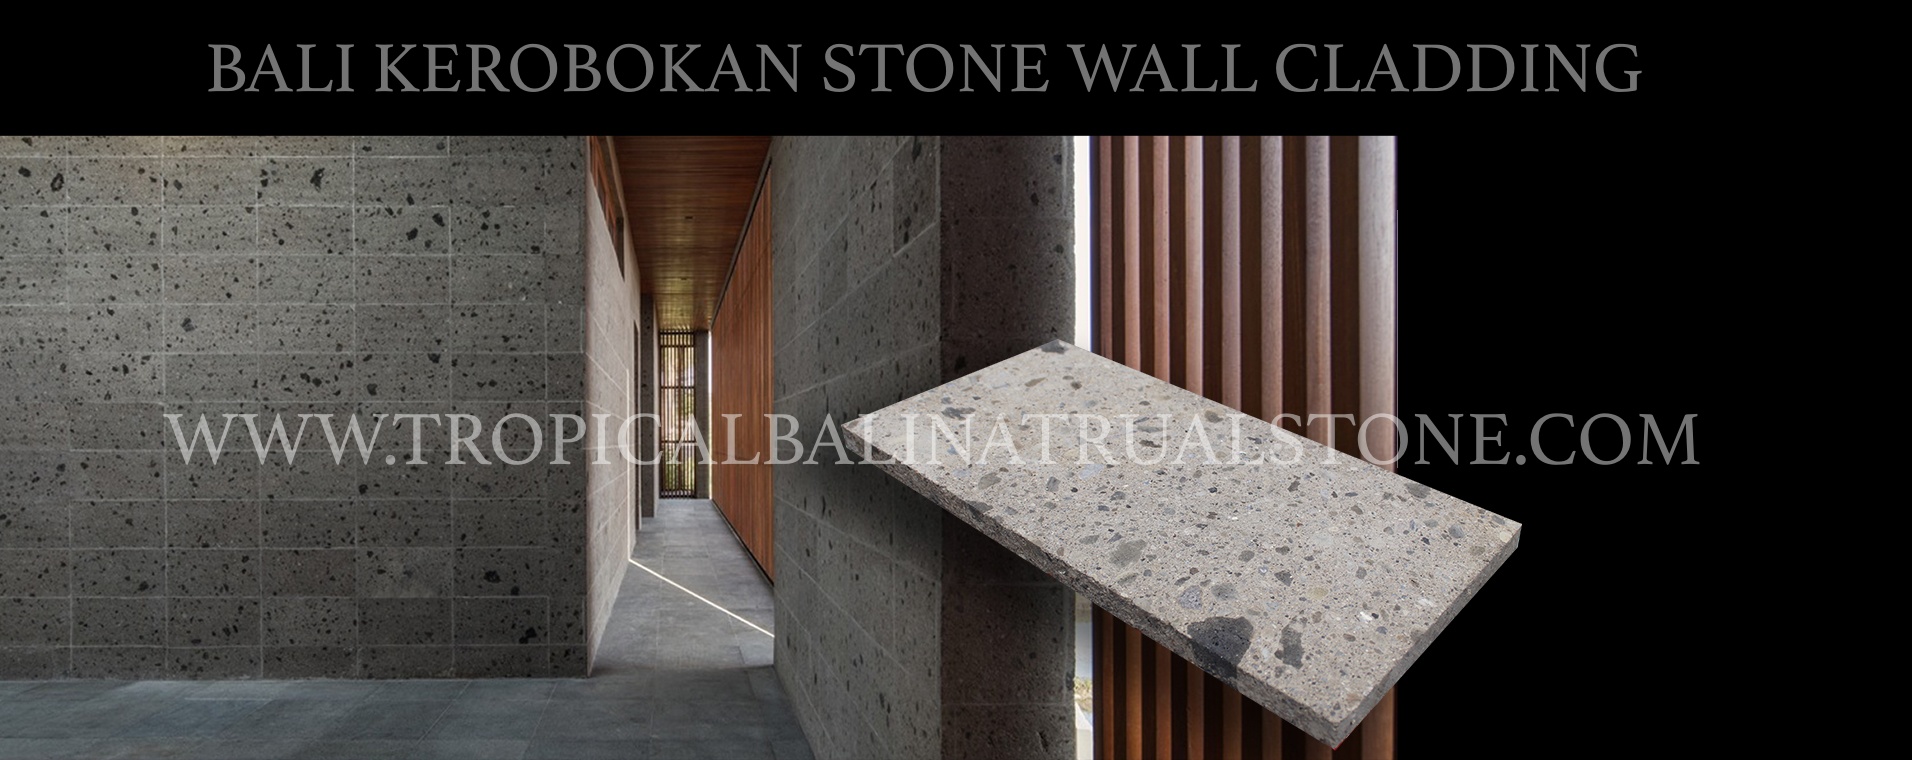 Kerobokan stone,bali kerobokan stone,kerobokan tiles kerobokan wall cladding